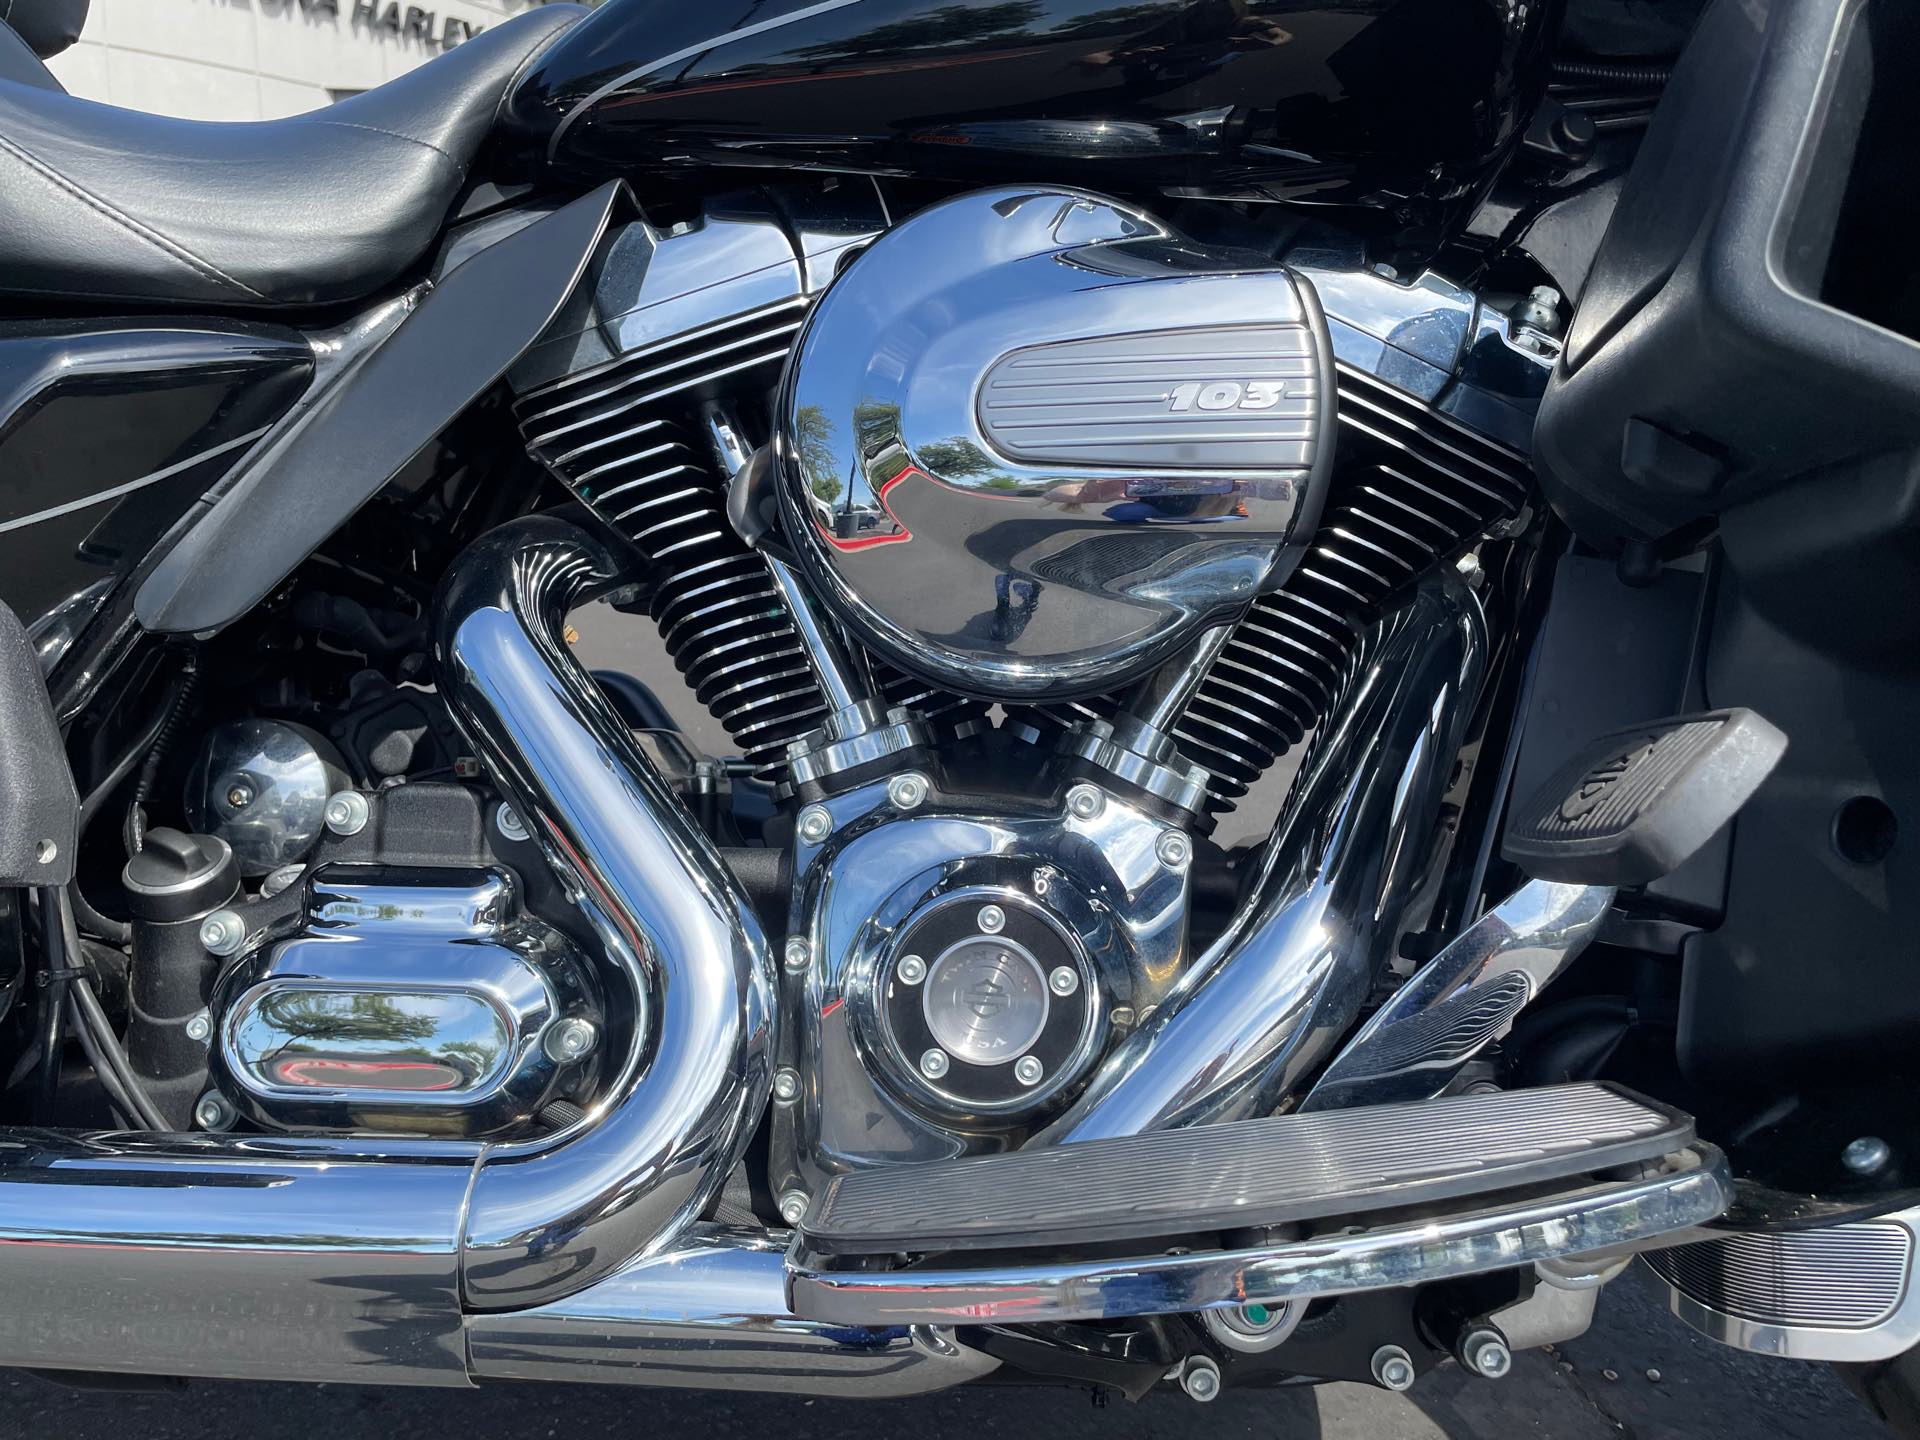 2016 Harley-Davidson Electra Glide Ultra Limited at Buddy Stubbs Arizona Harley-Davidson